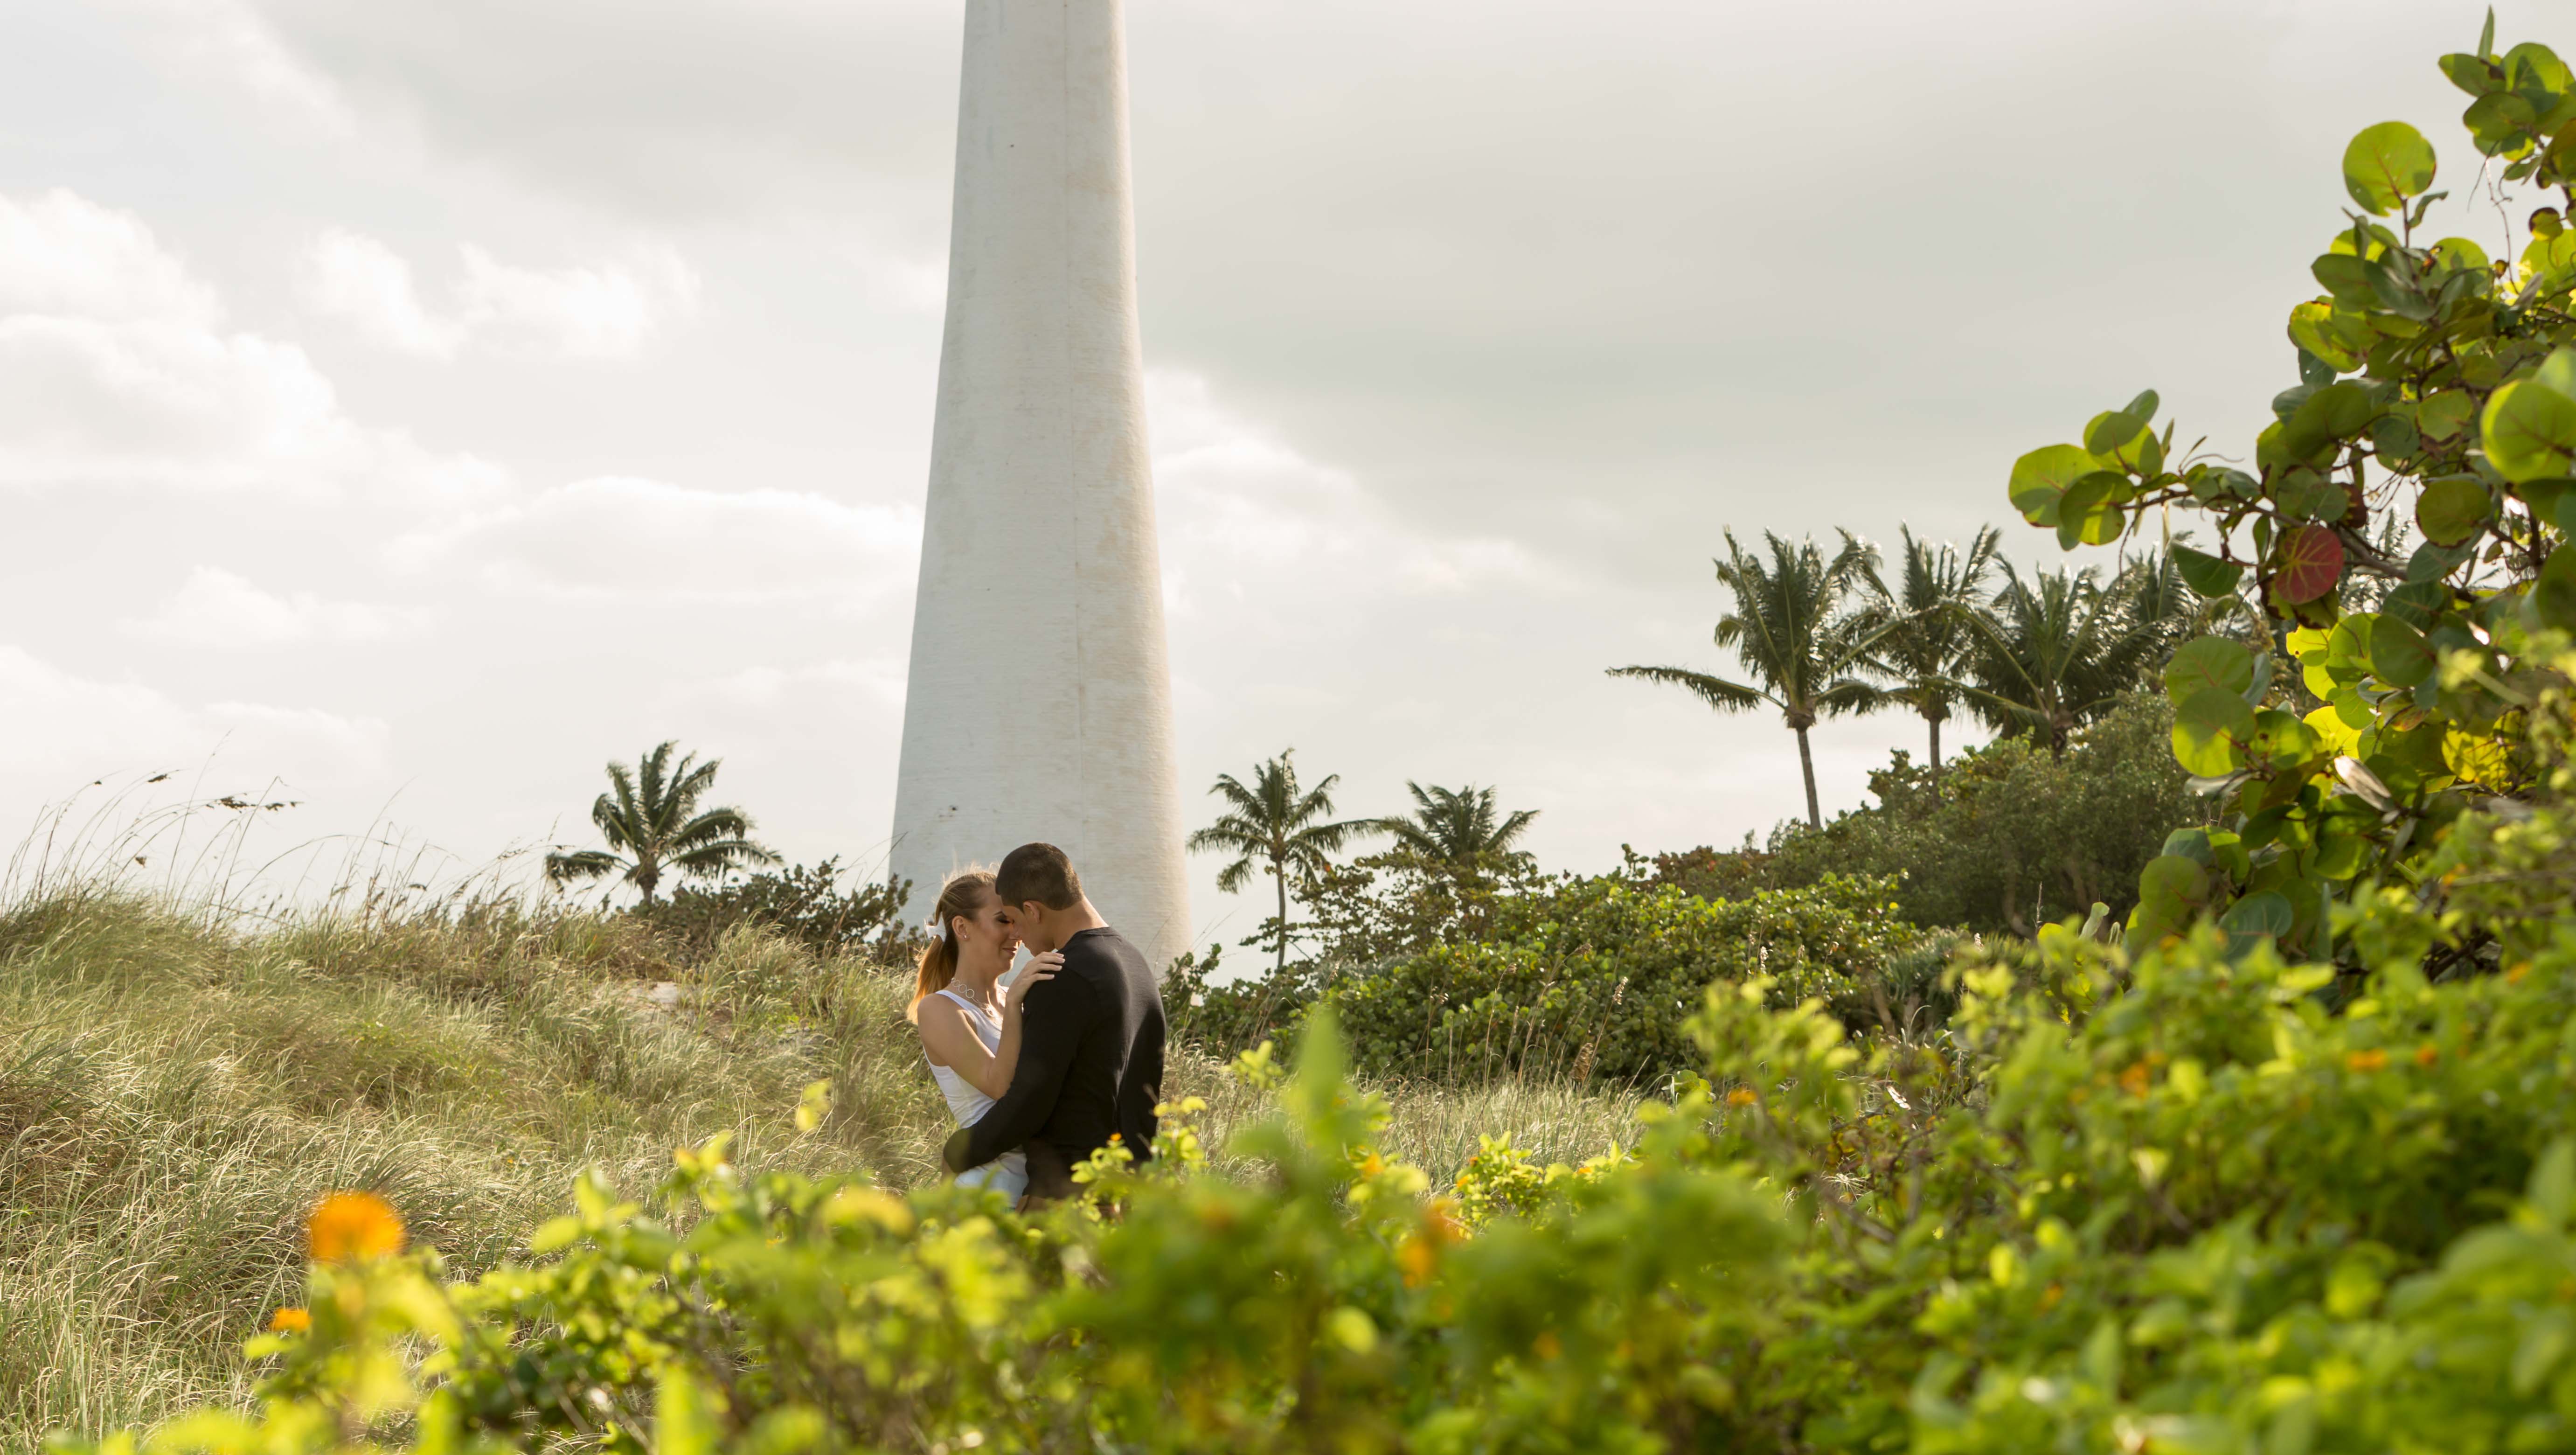 Key Biscayne Engagement session at the Key Biscayne Lighthouse in Key Biscayne Florida